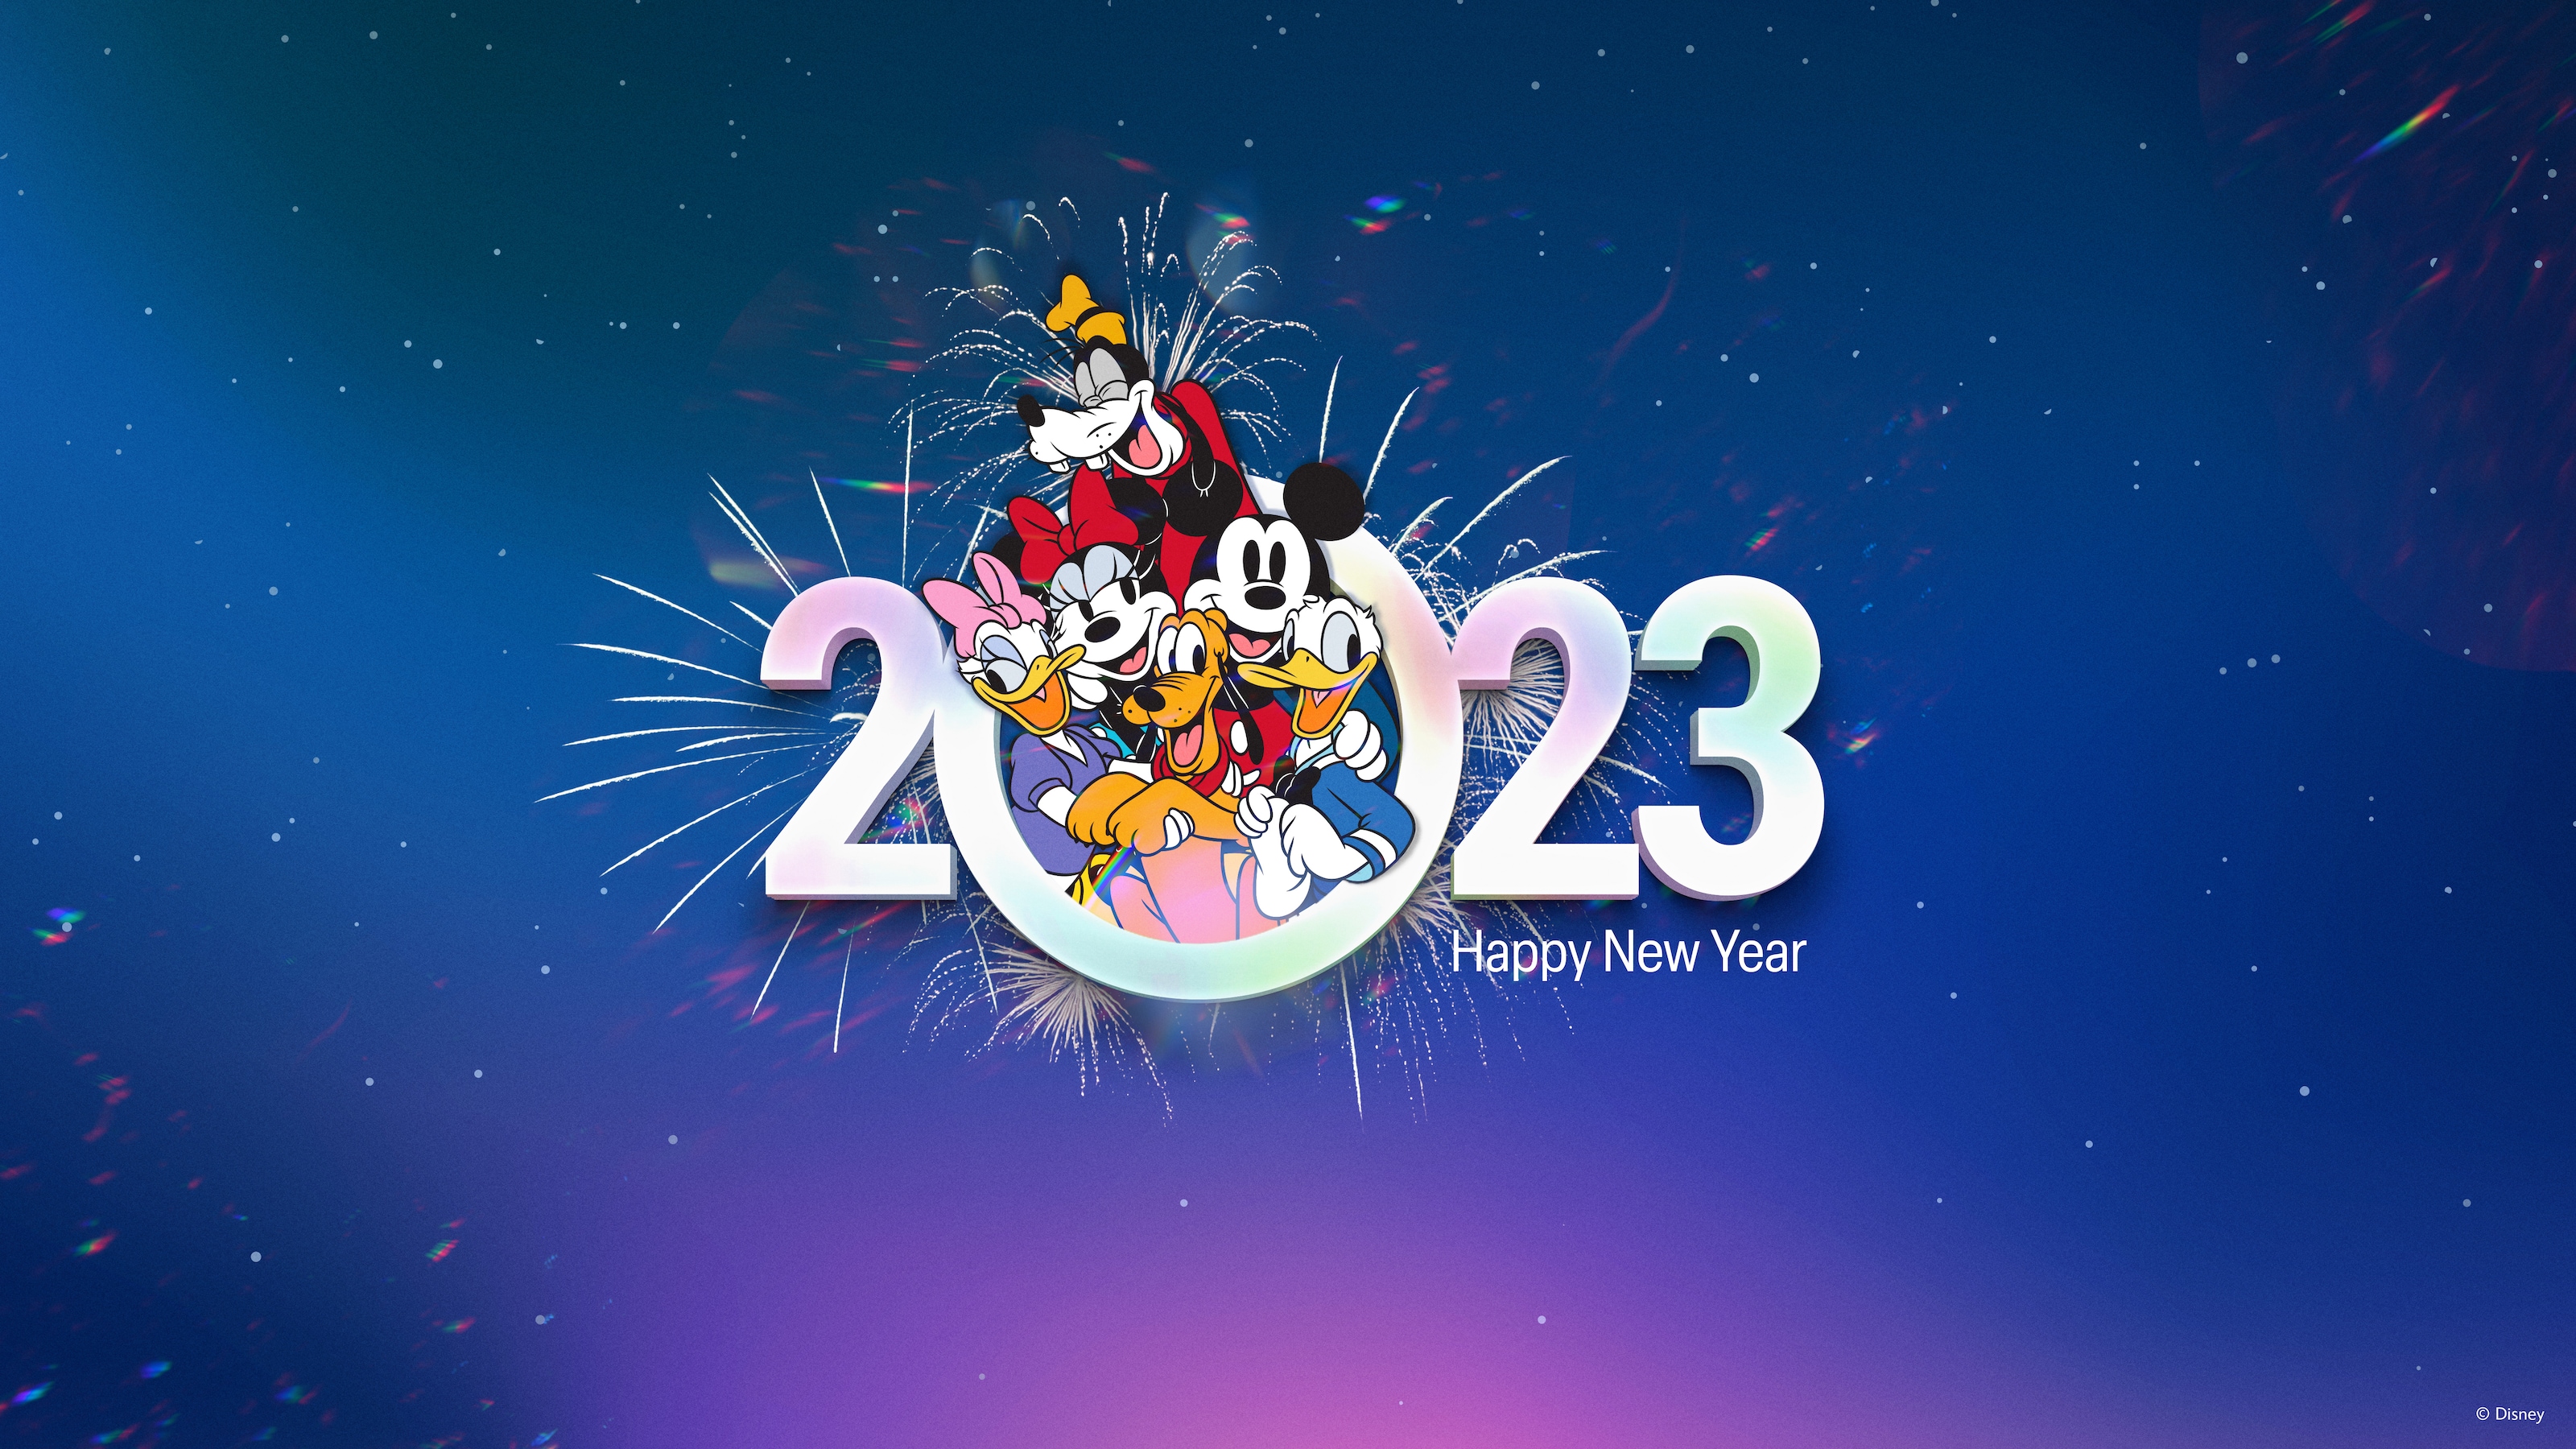 Happy New Year 23 Wallpaper Desktop Ipad Disney Parks Blog